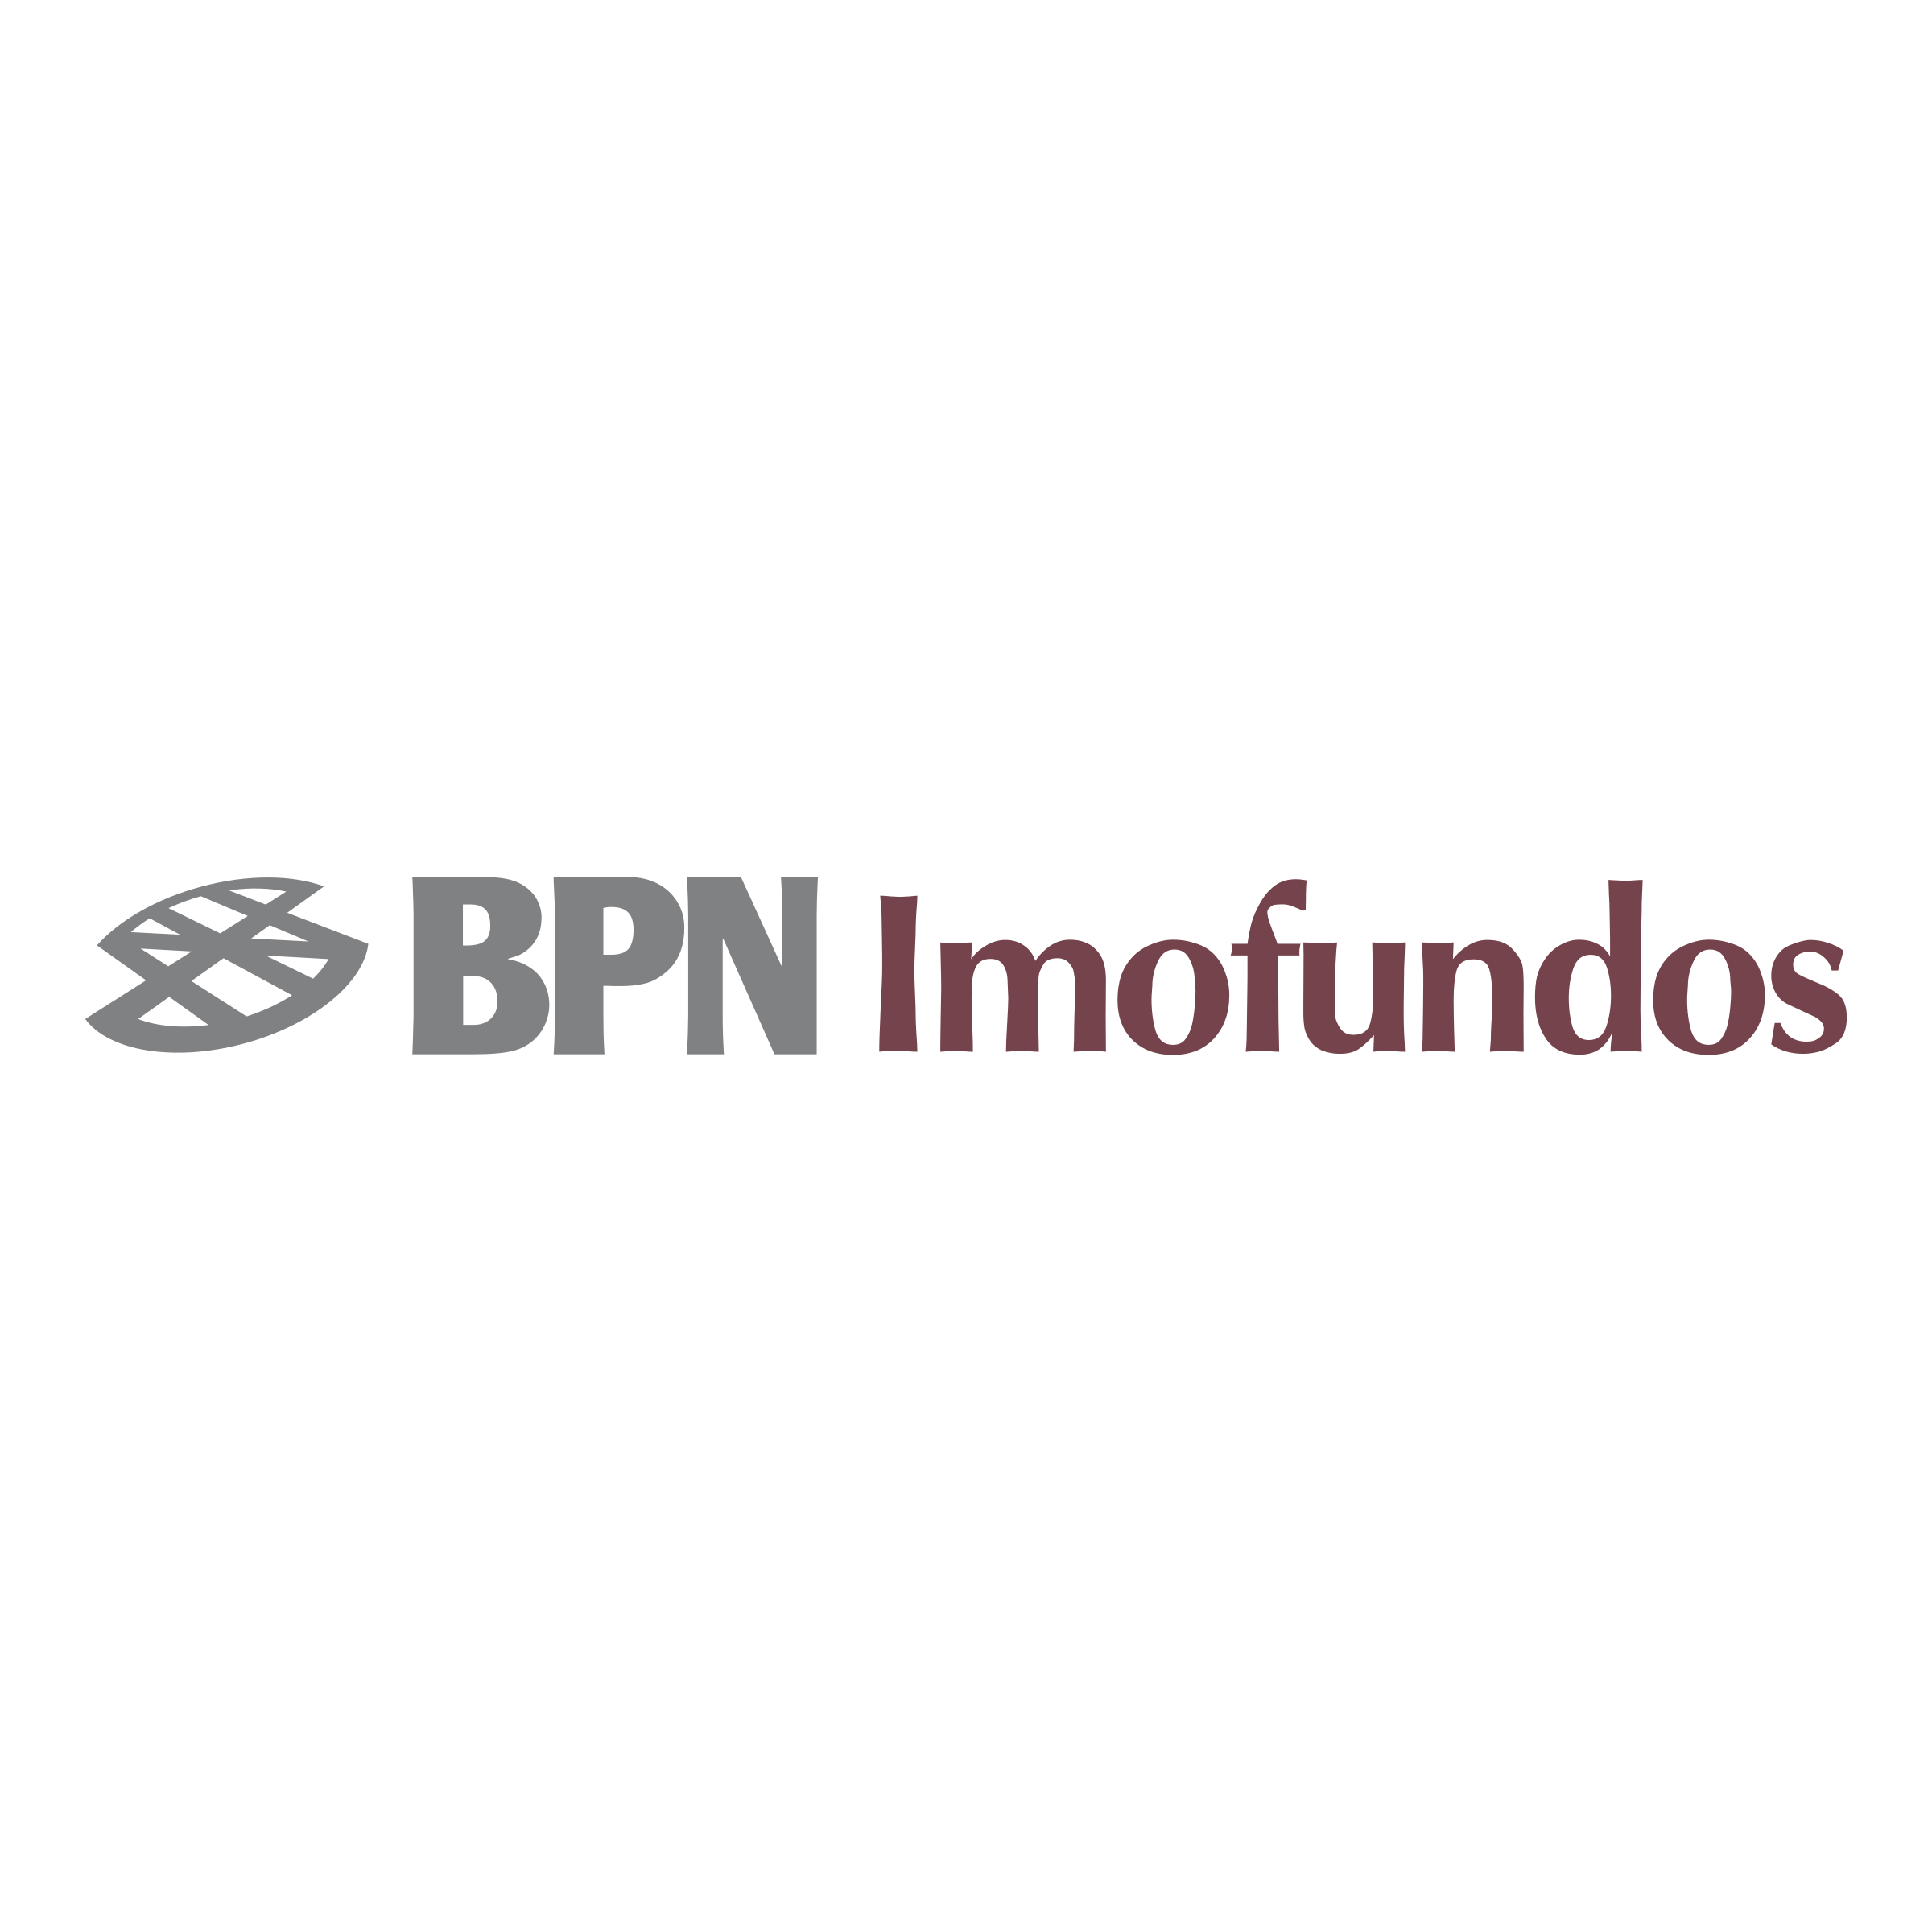 BPN Logo - BPN Imofundos Logo PNG Transparent & SVG Vector